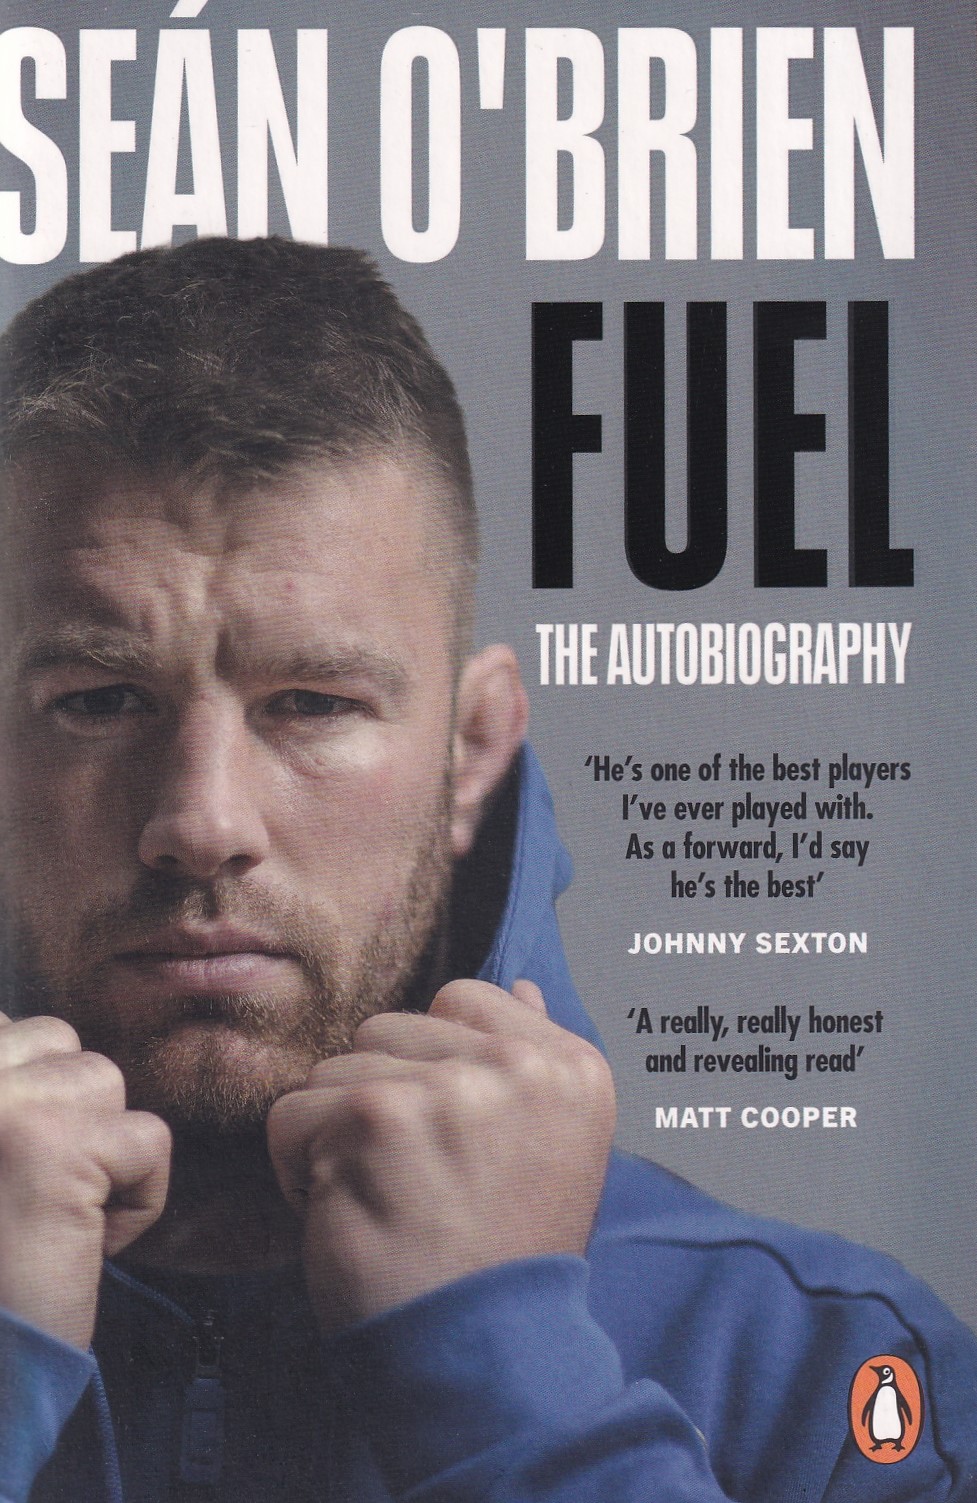 Fuel: The Autobiography by Seán O'Brien